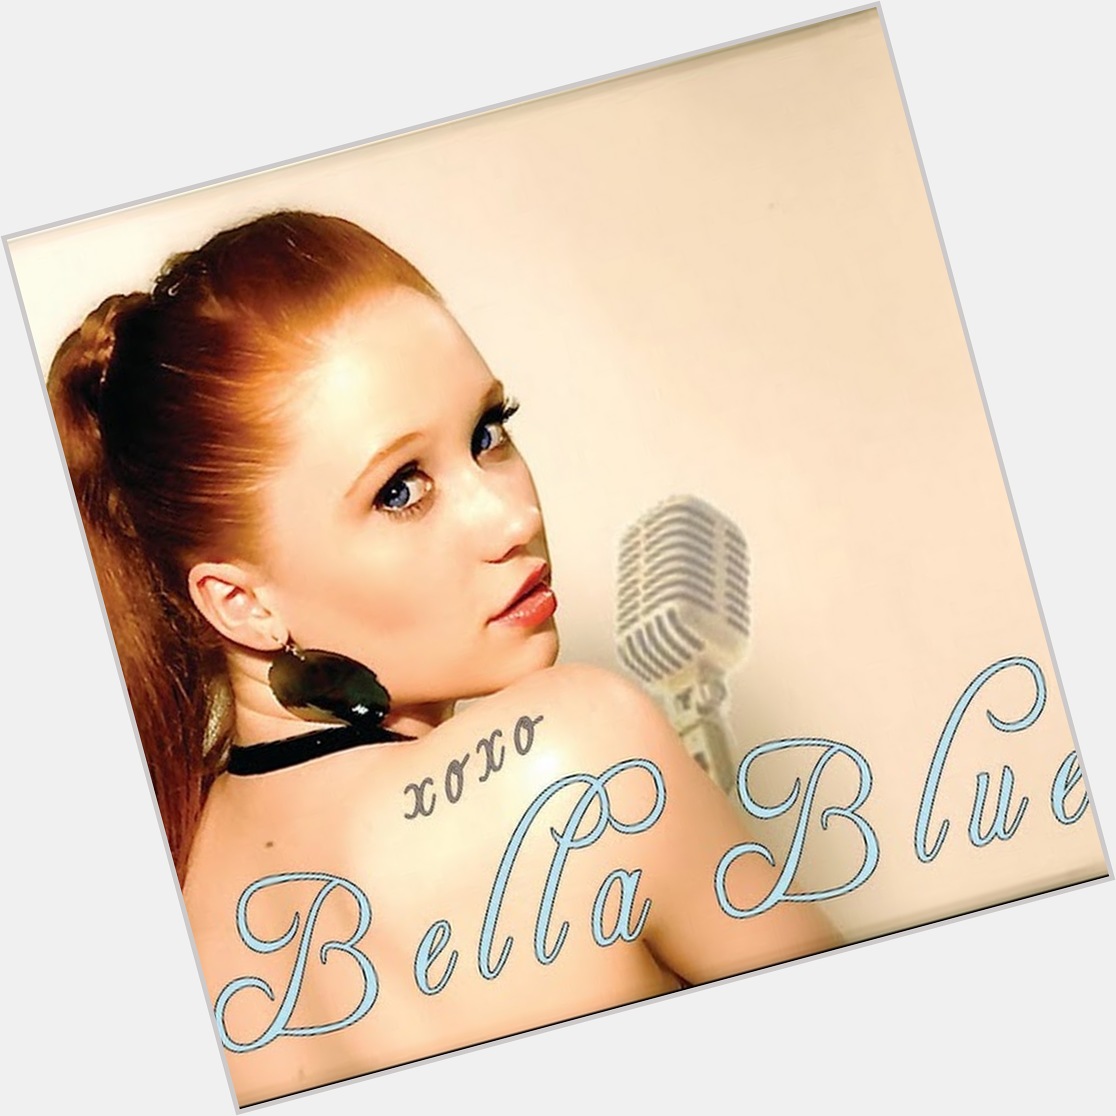 Bella Blue exclusive hot pic 5.jpg.